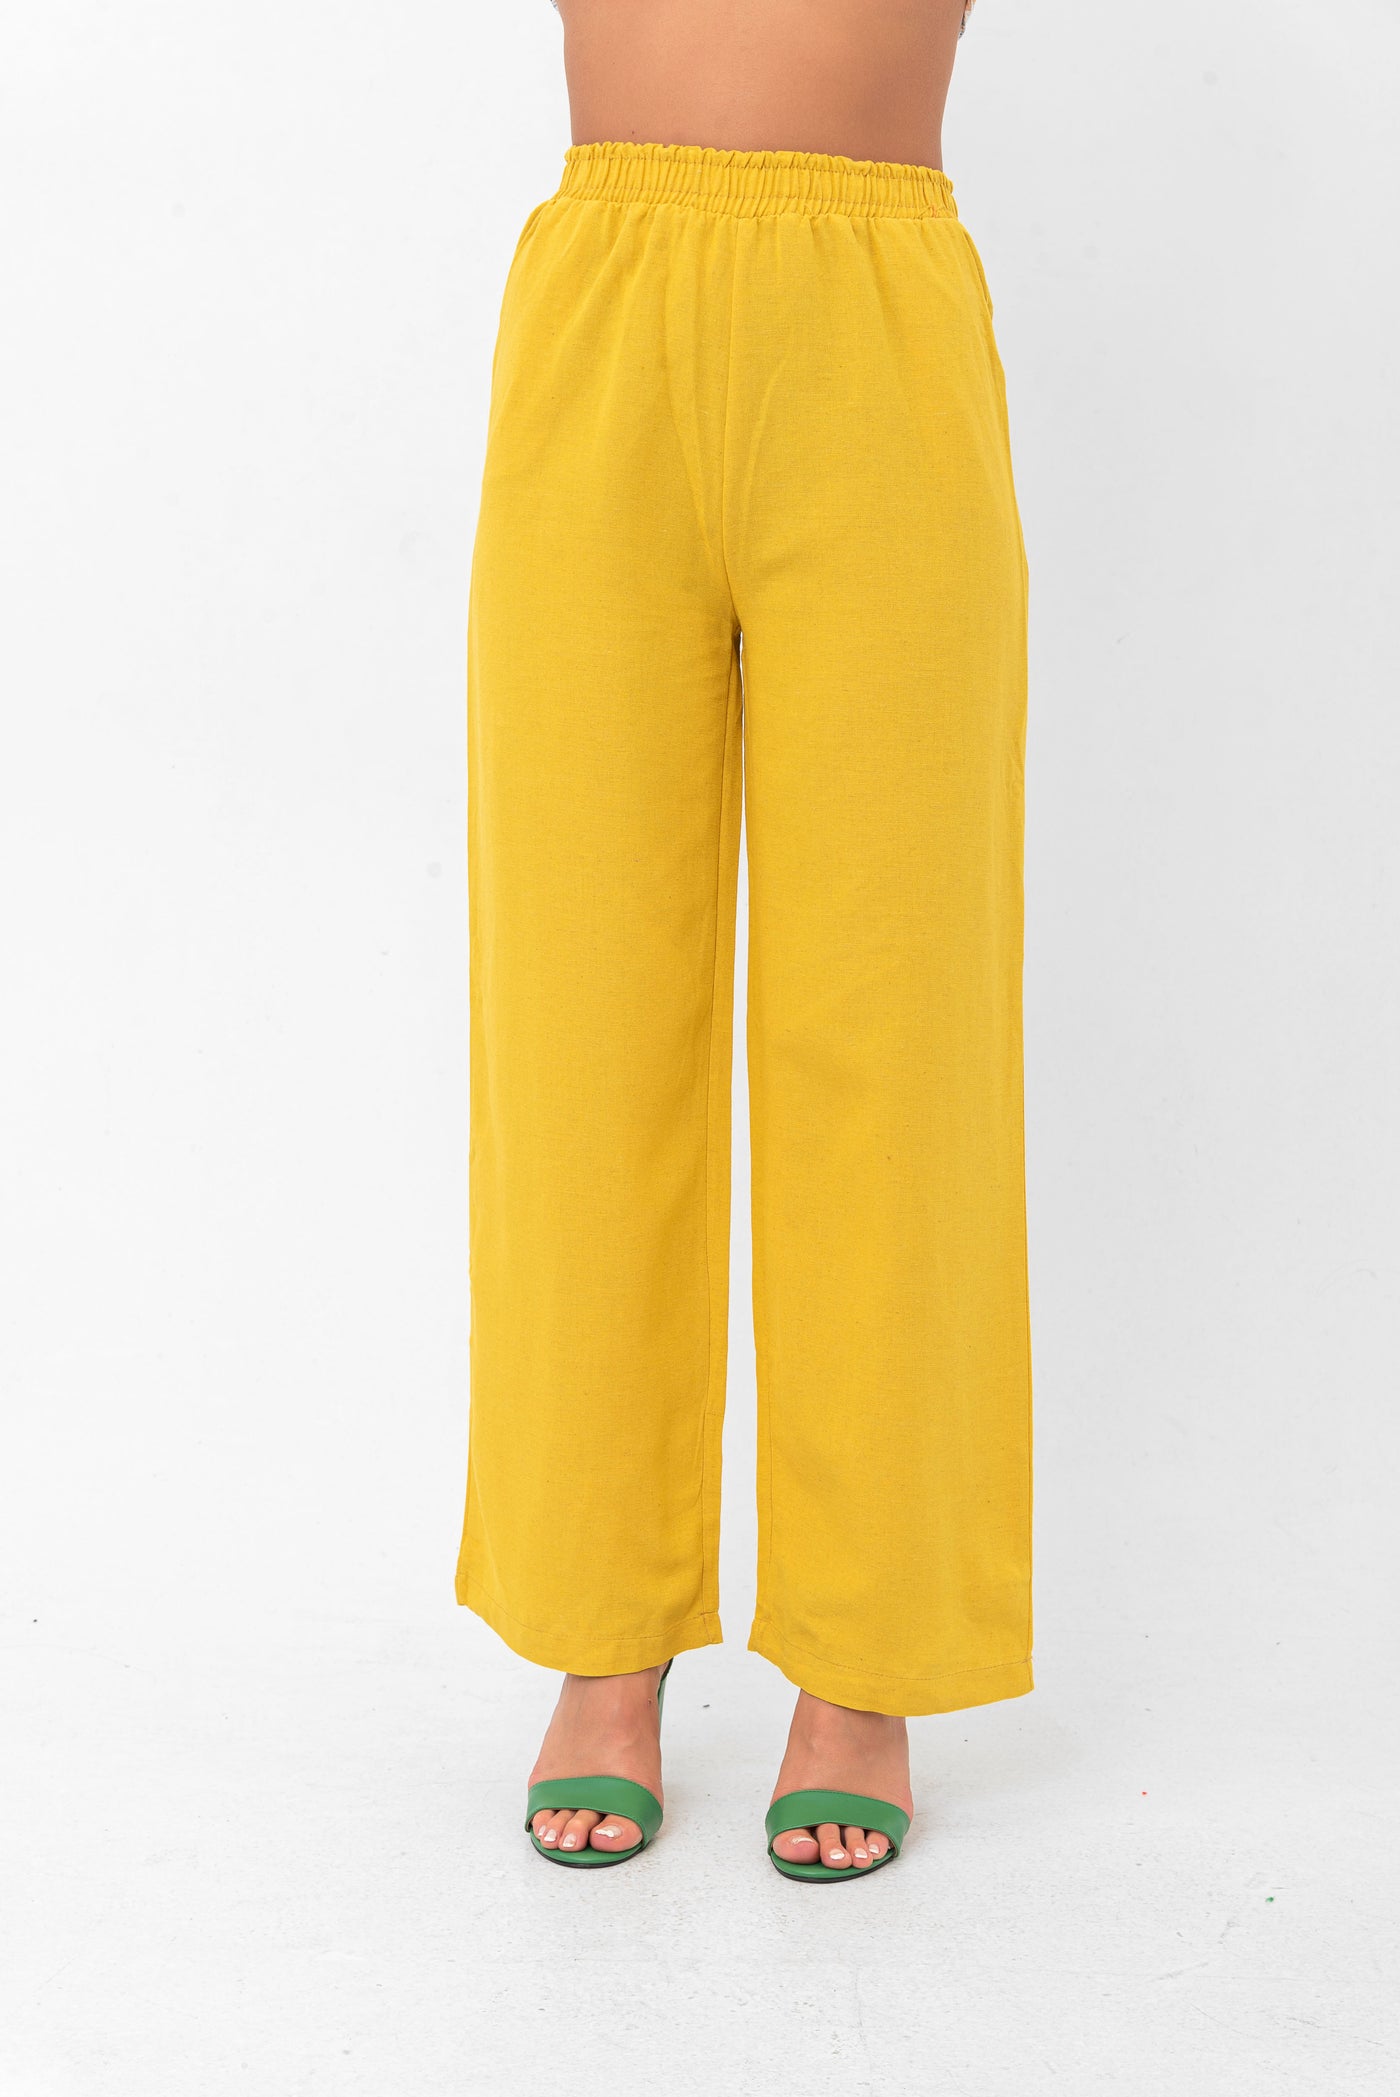 Roxy Casual Lounge Pants - Yellow